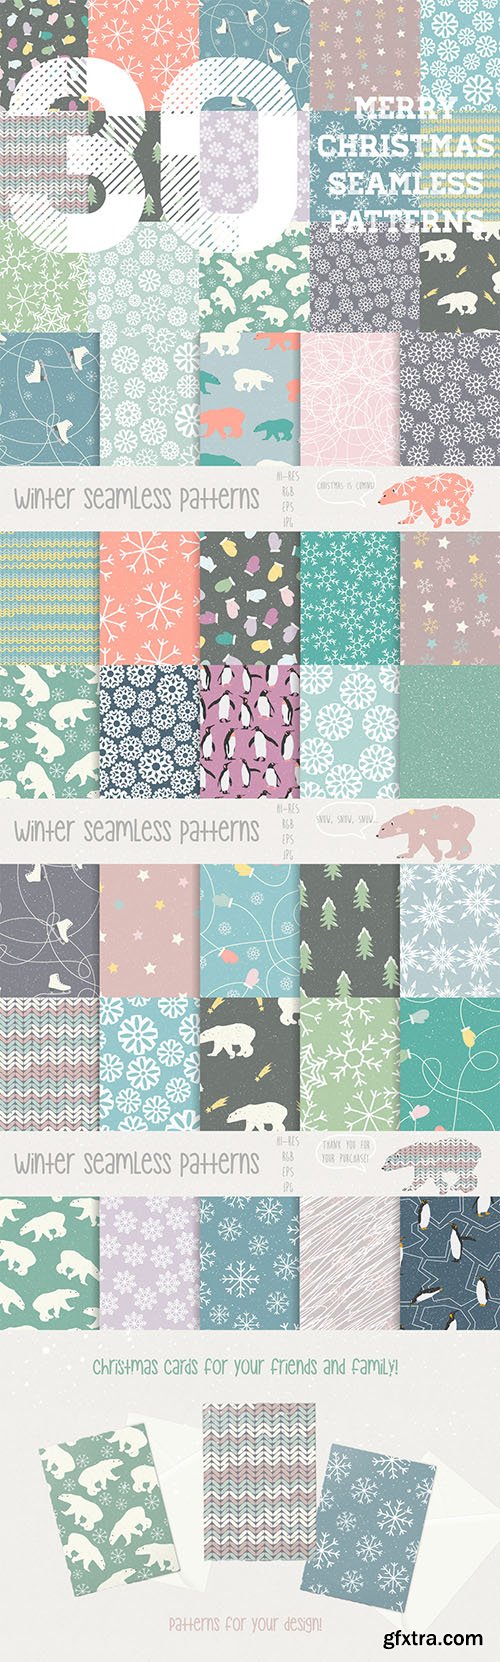 30 Winter Patterns